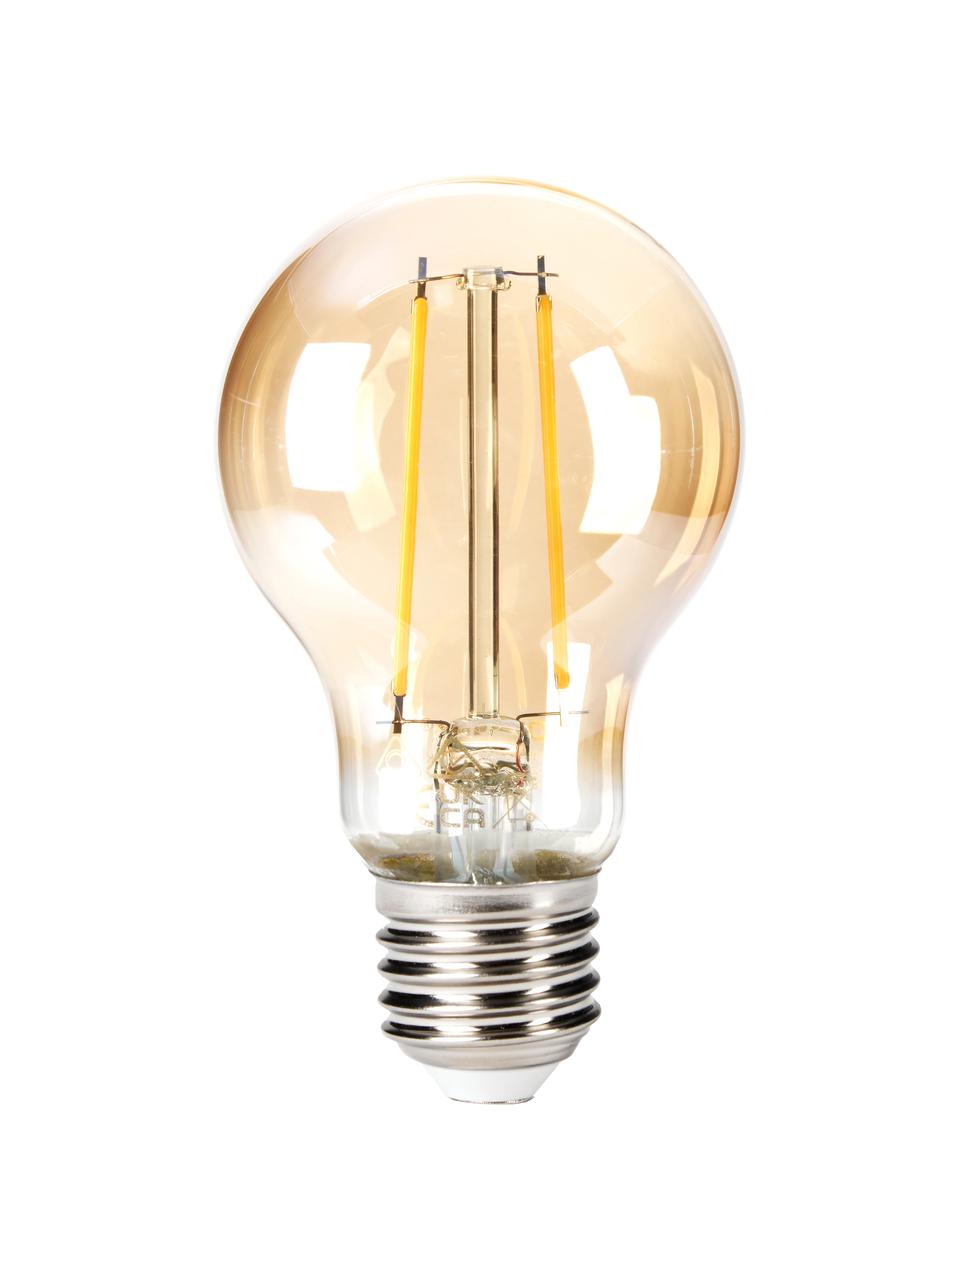 Žárovky E27, 400 lm, teplá bílá, 7 ks, Zlatá, transparentní, Ø 6 cm, V 10 cm